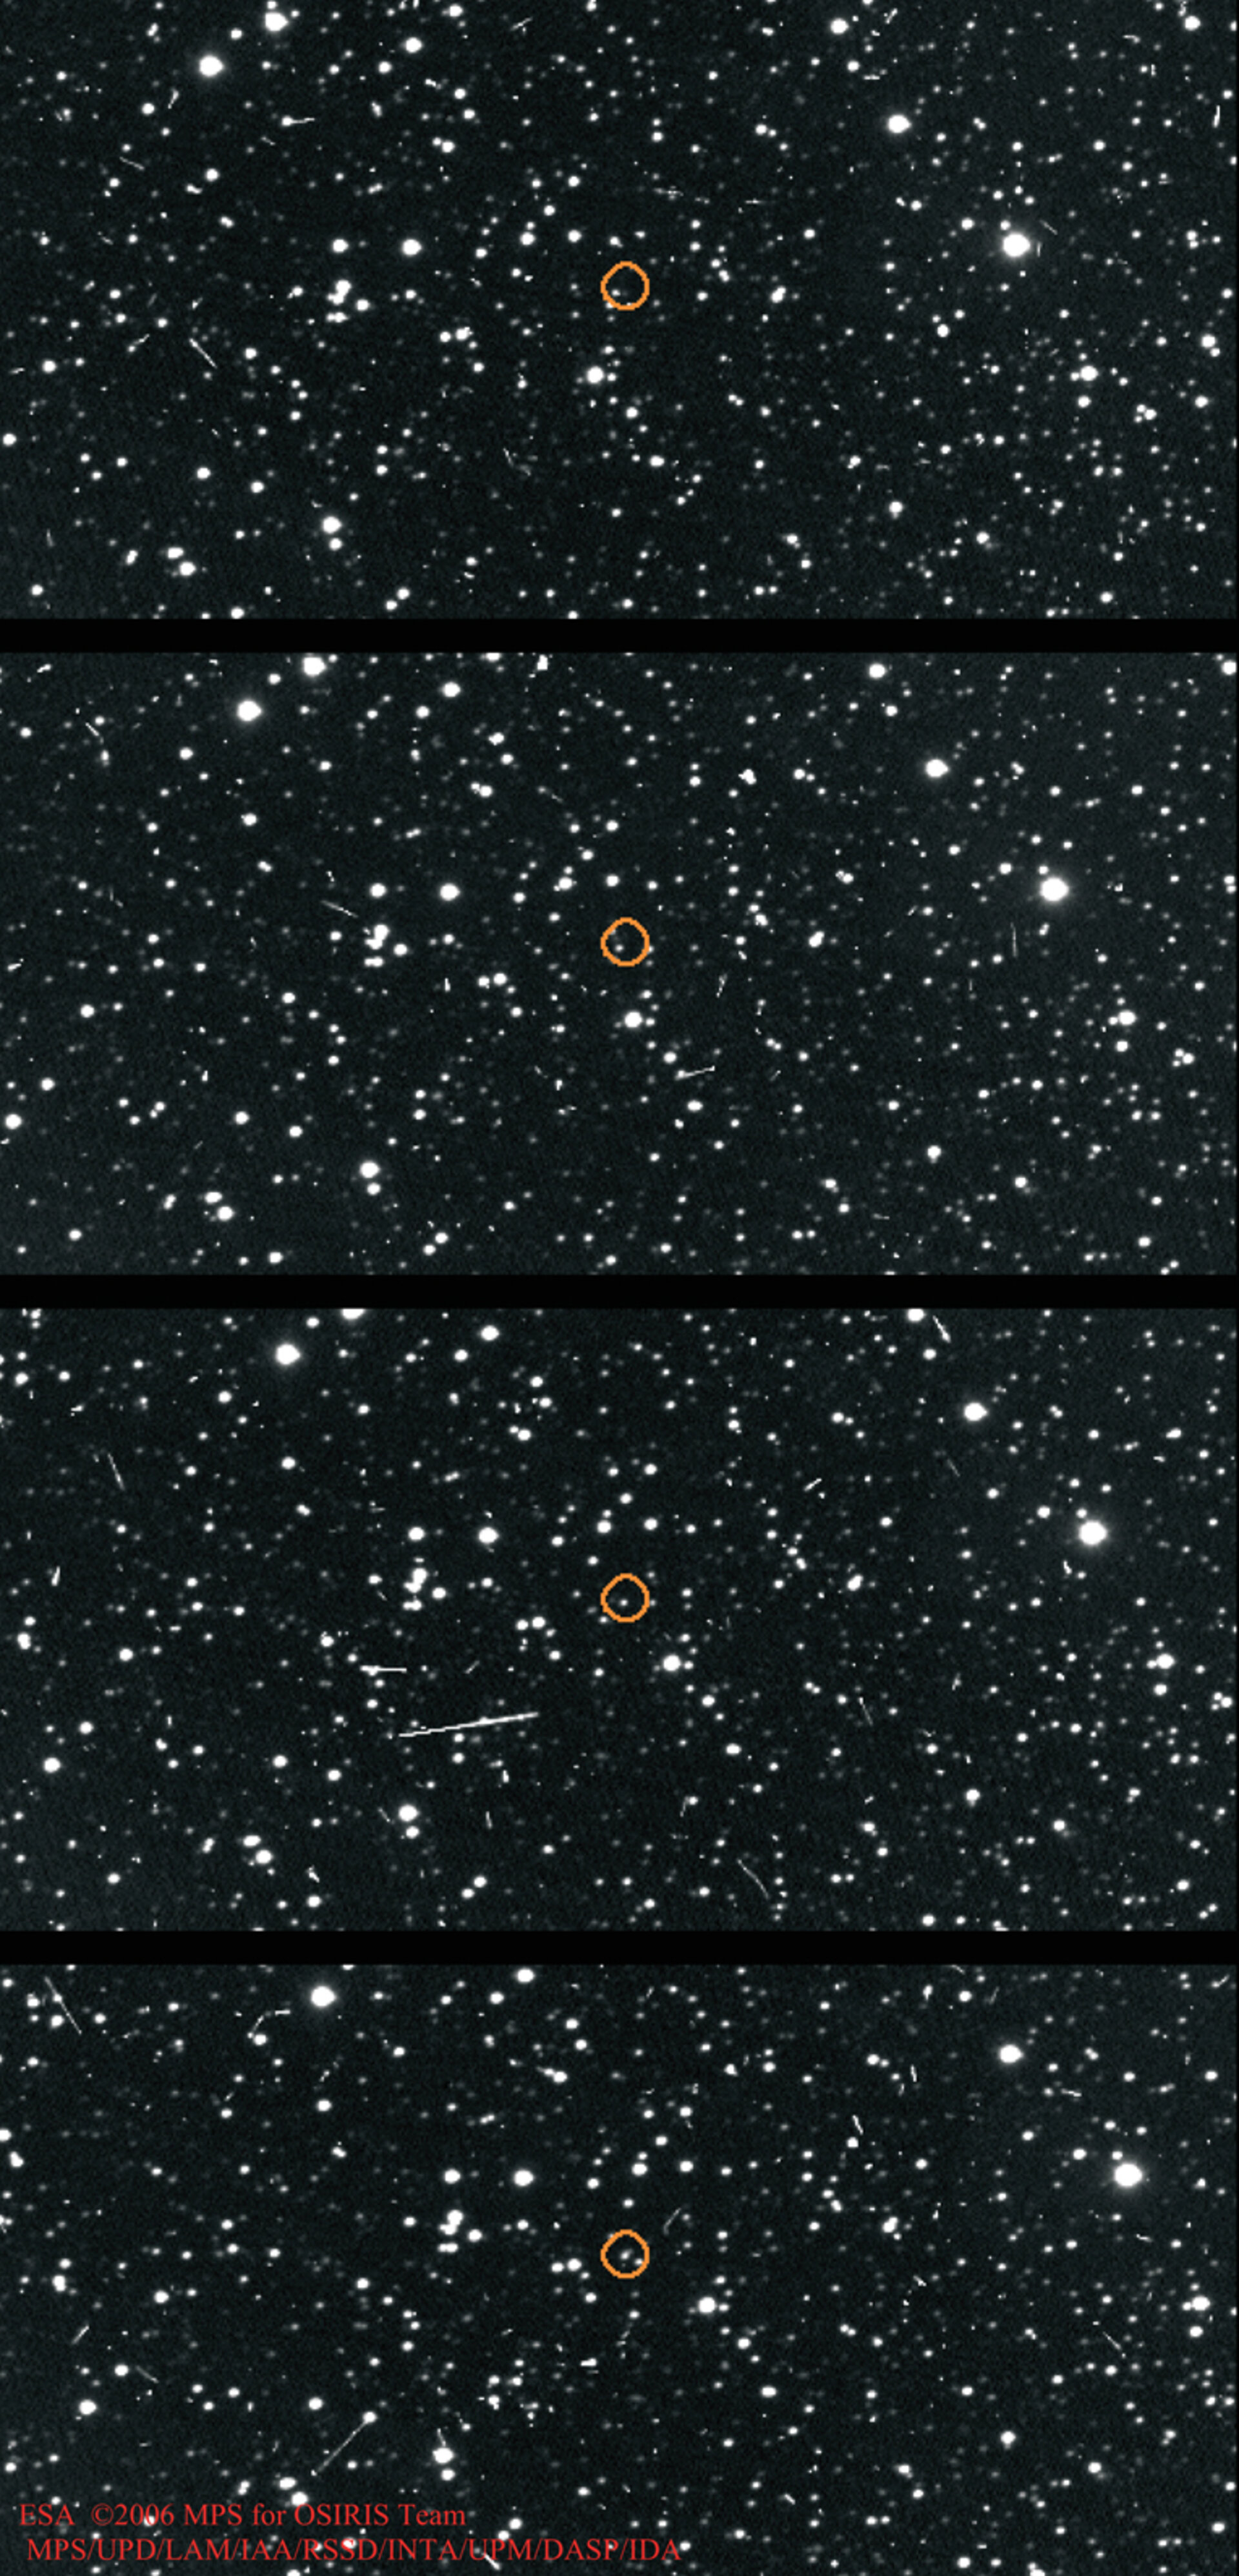 Asteroid Steins observed by Rosetta’s OSIRIS camera